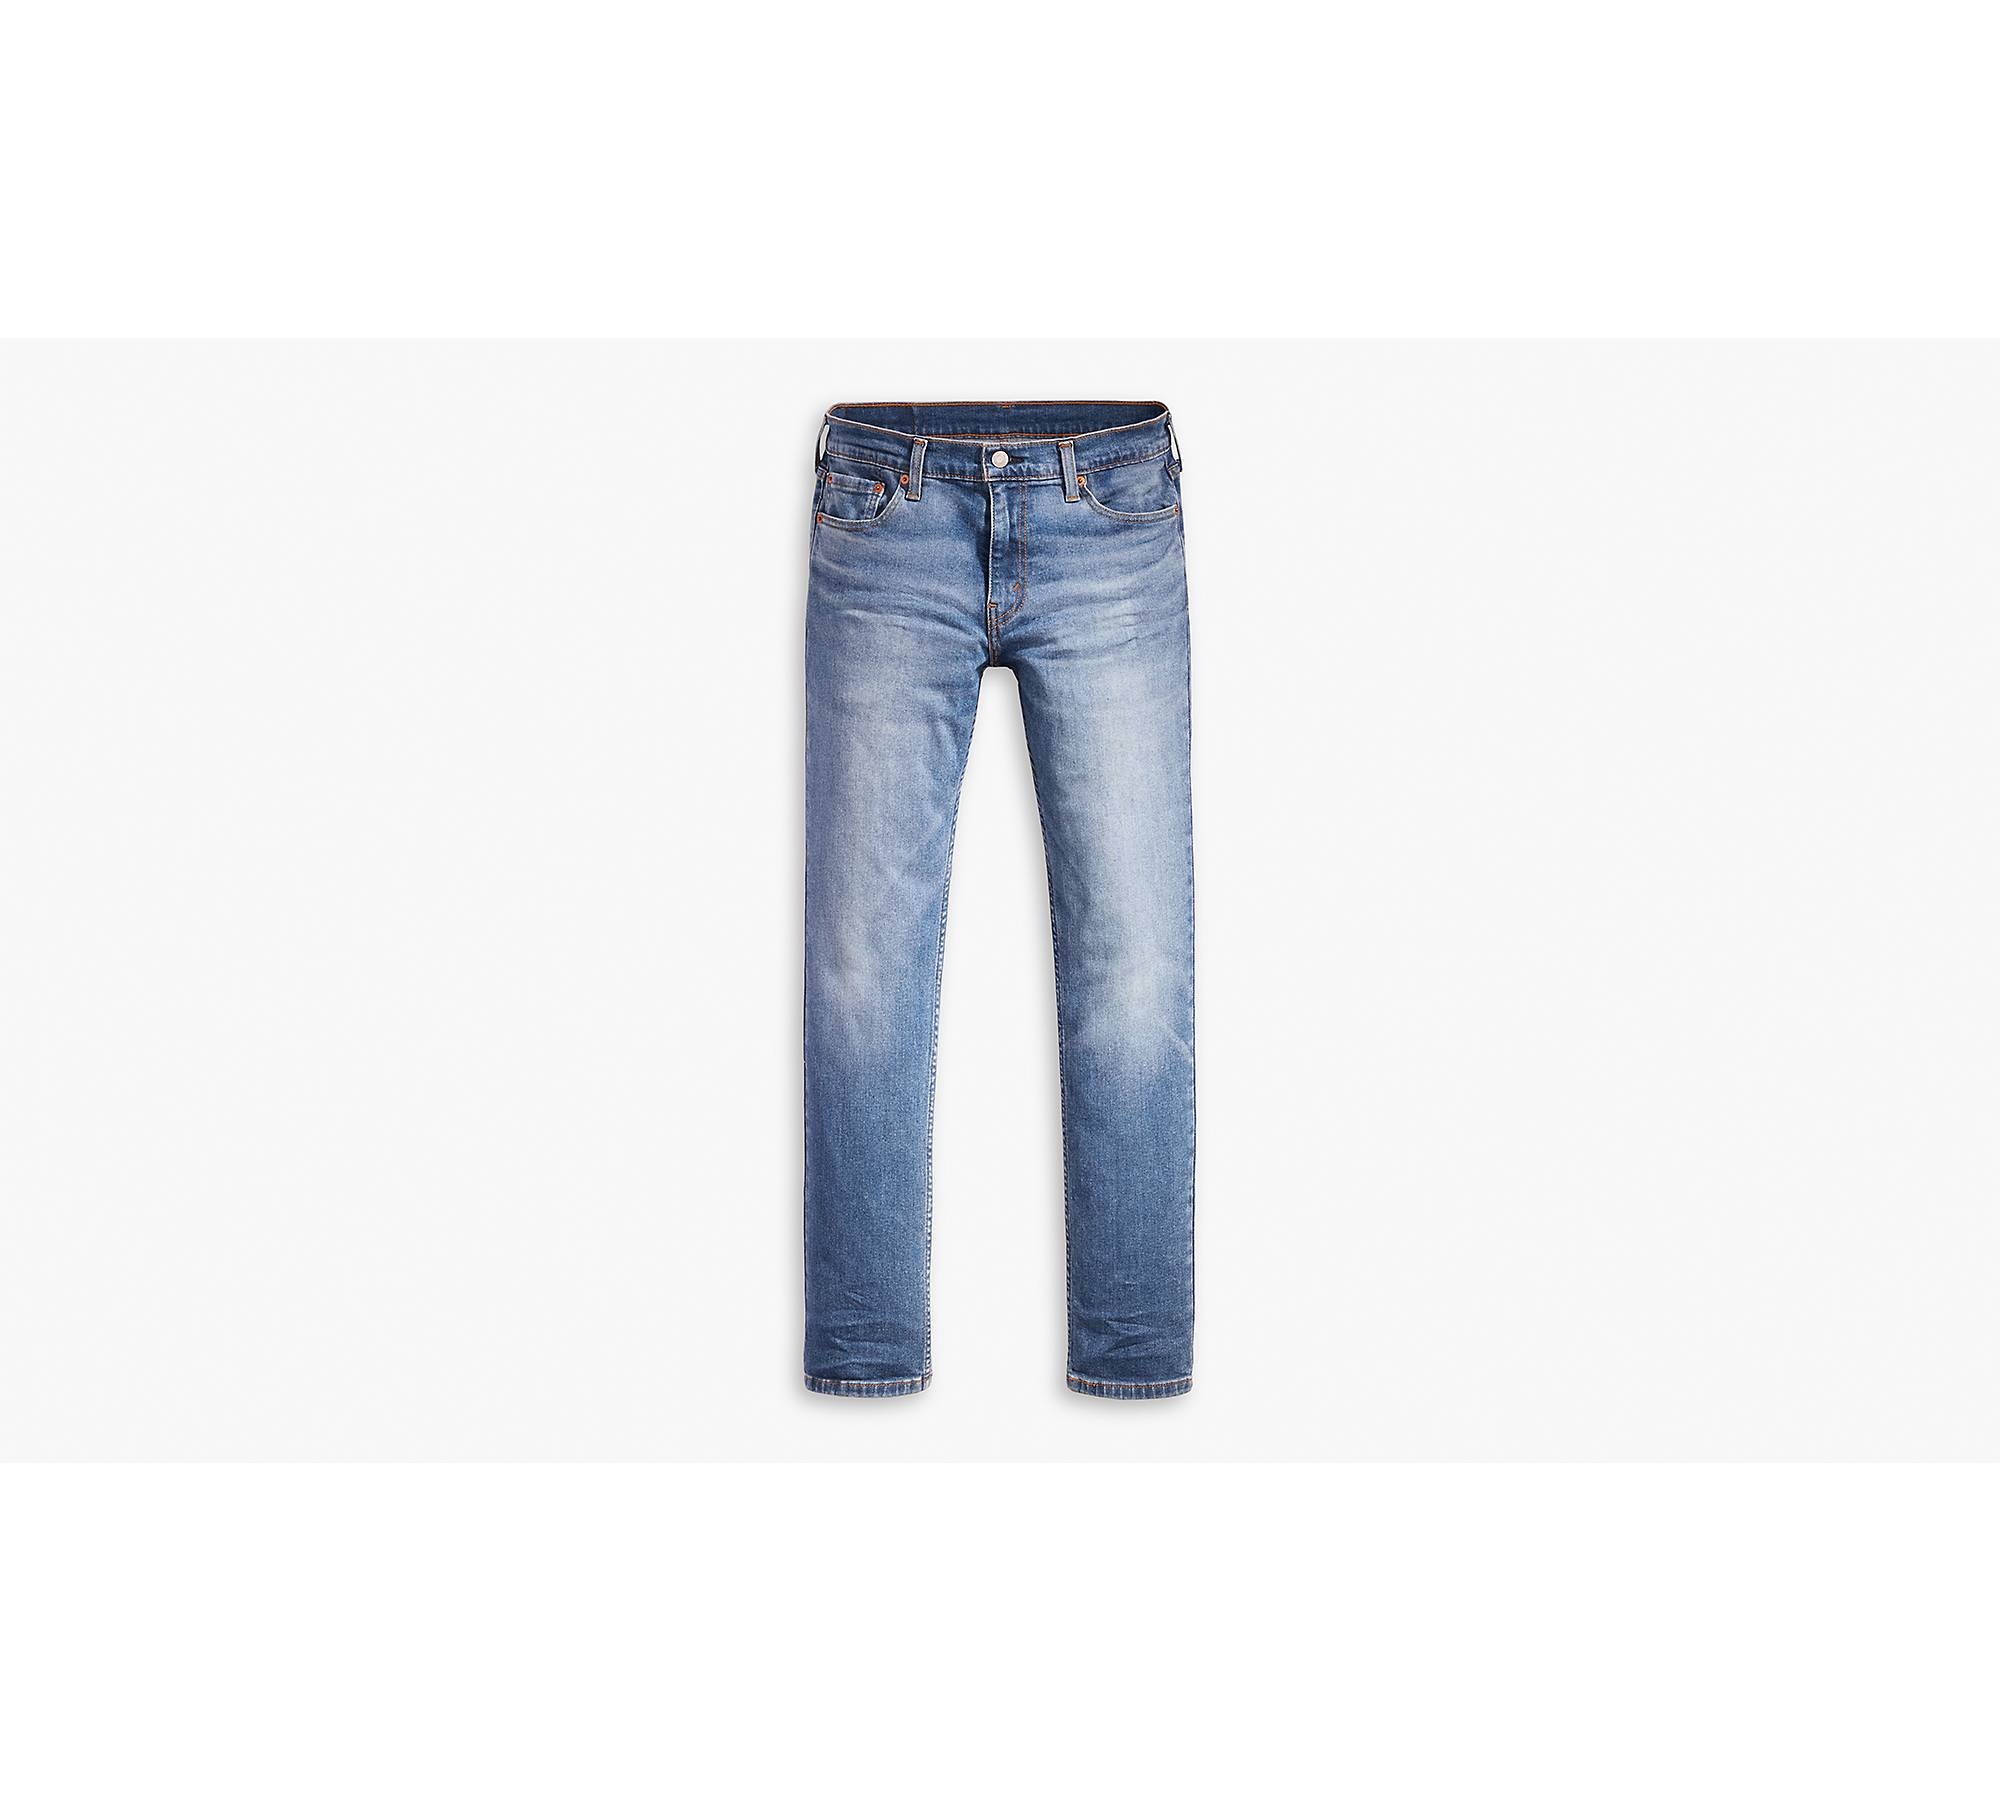 Levi's Flex Men's 511 Slim Fit Jeans - Begonia Overt